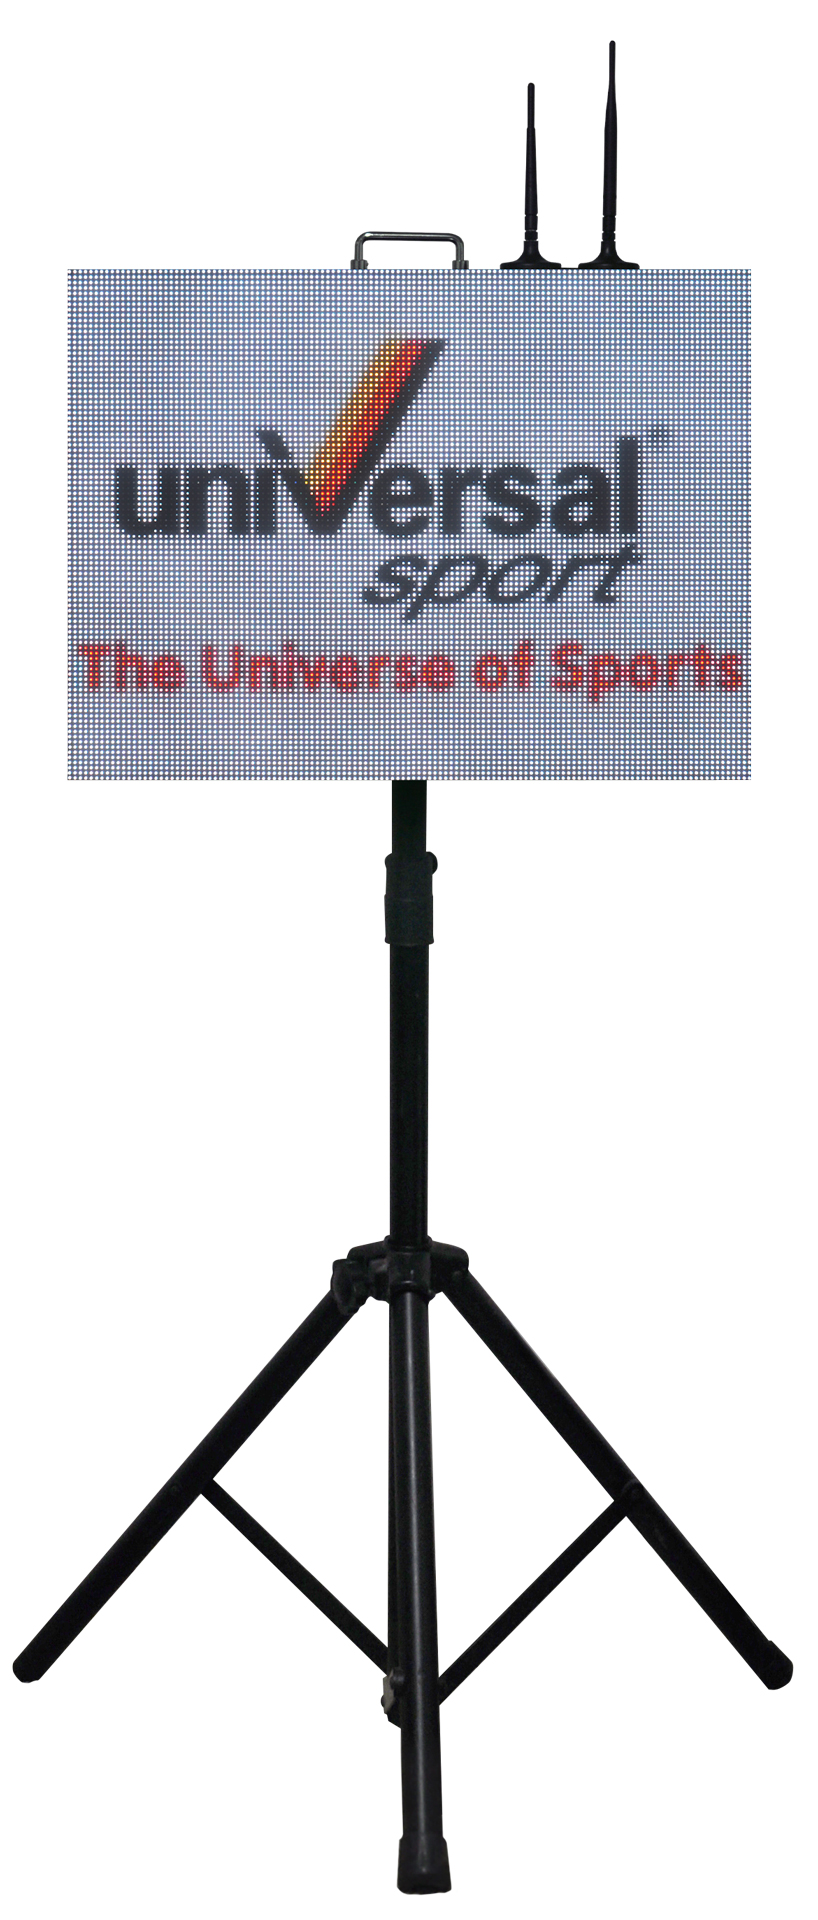 Multi-Sport Scorli Anzeigegerät mit Logo